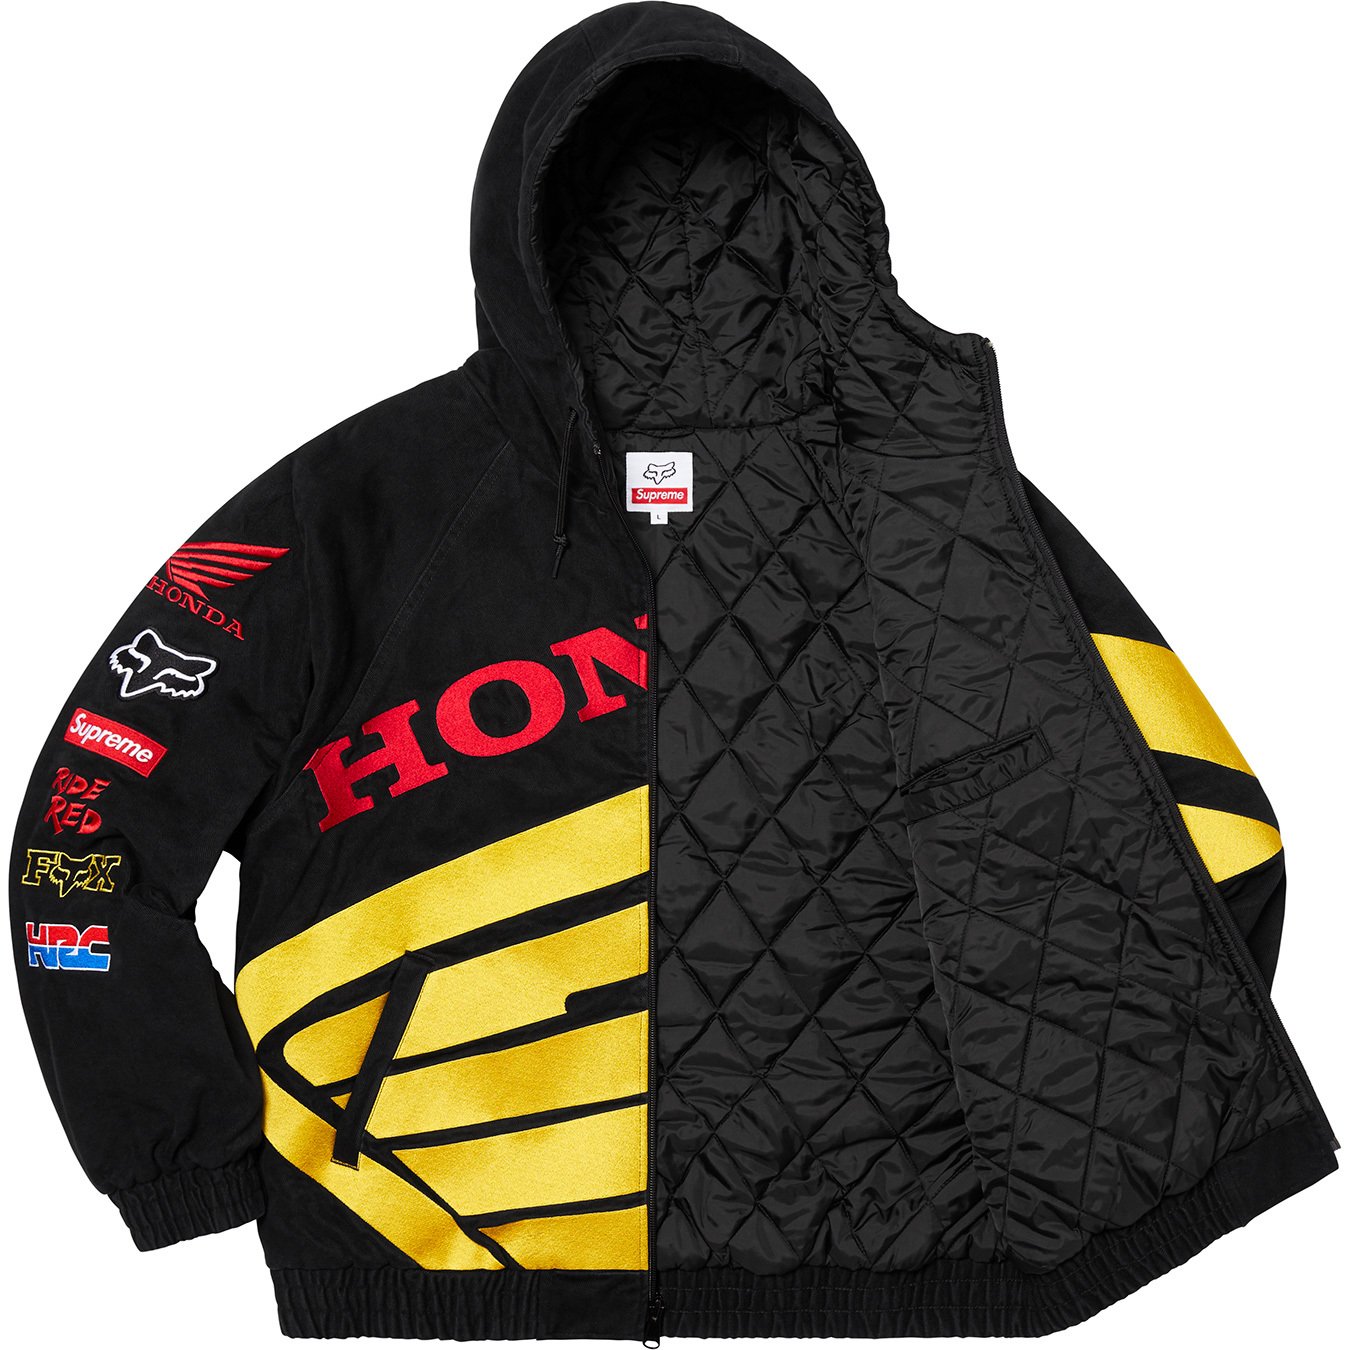 Supreme®/Honda®/Fox® Racing Puffy Zip Up Jacket - Supreme Community